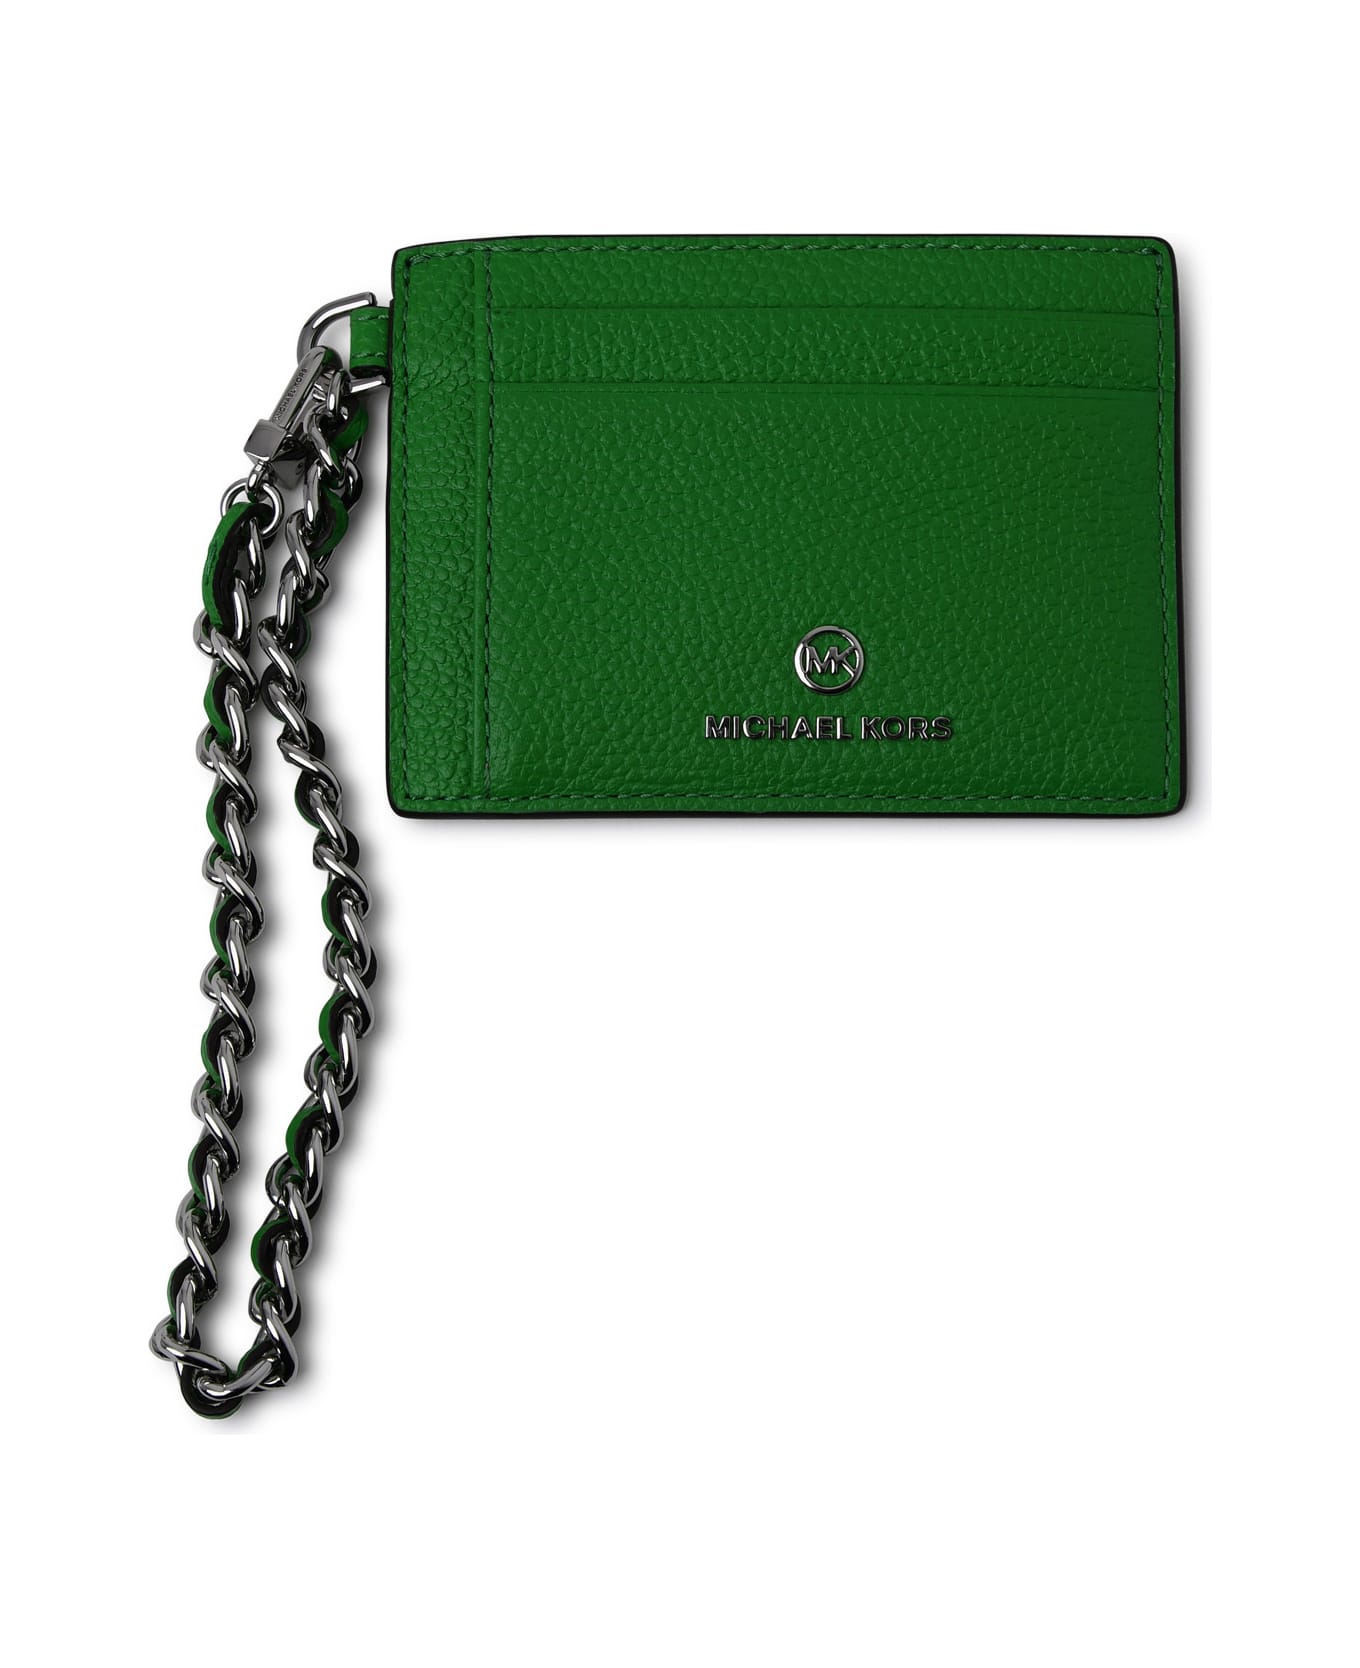 MICHAEL Michael Kors Green Leather Jet Set Card Holder - Green 財布